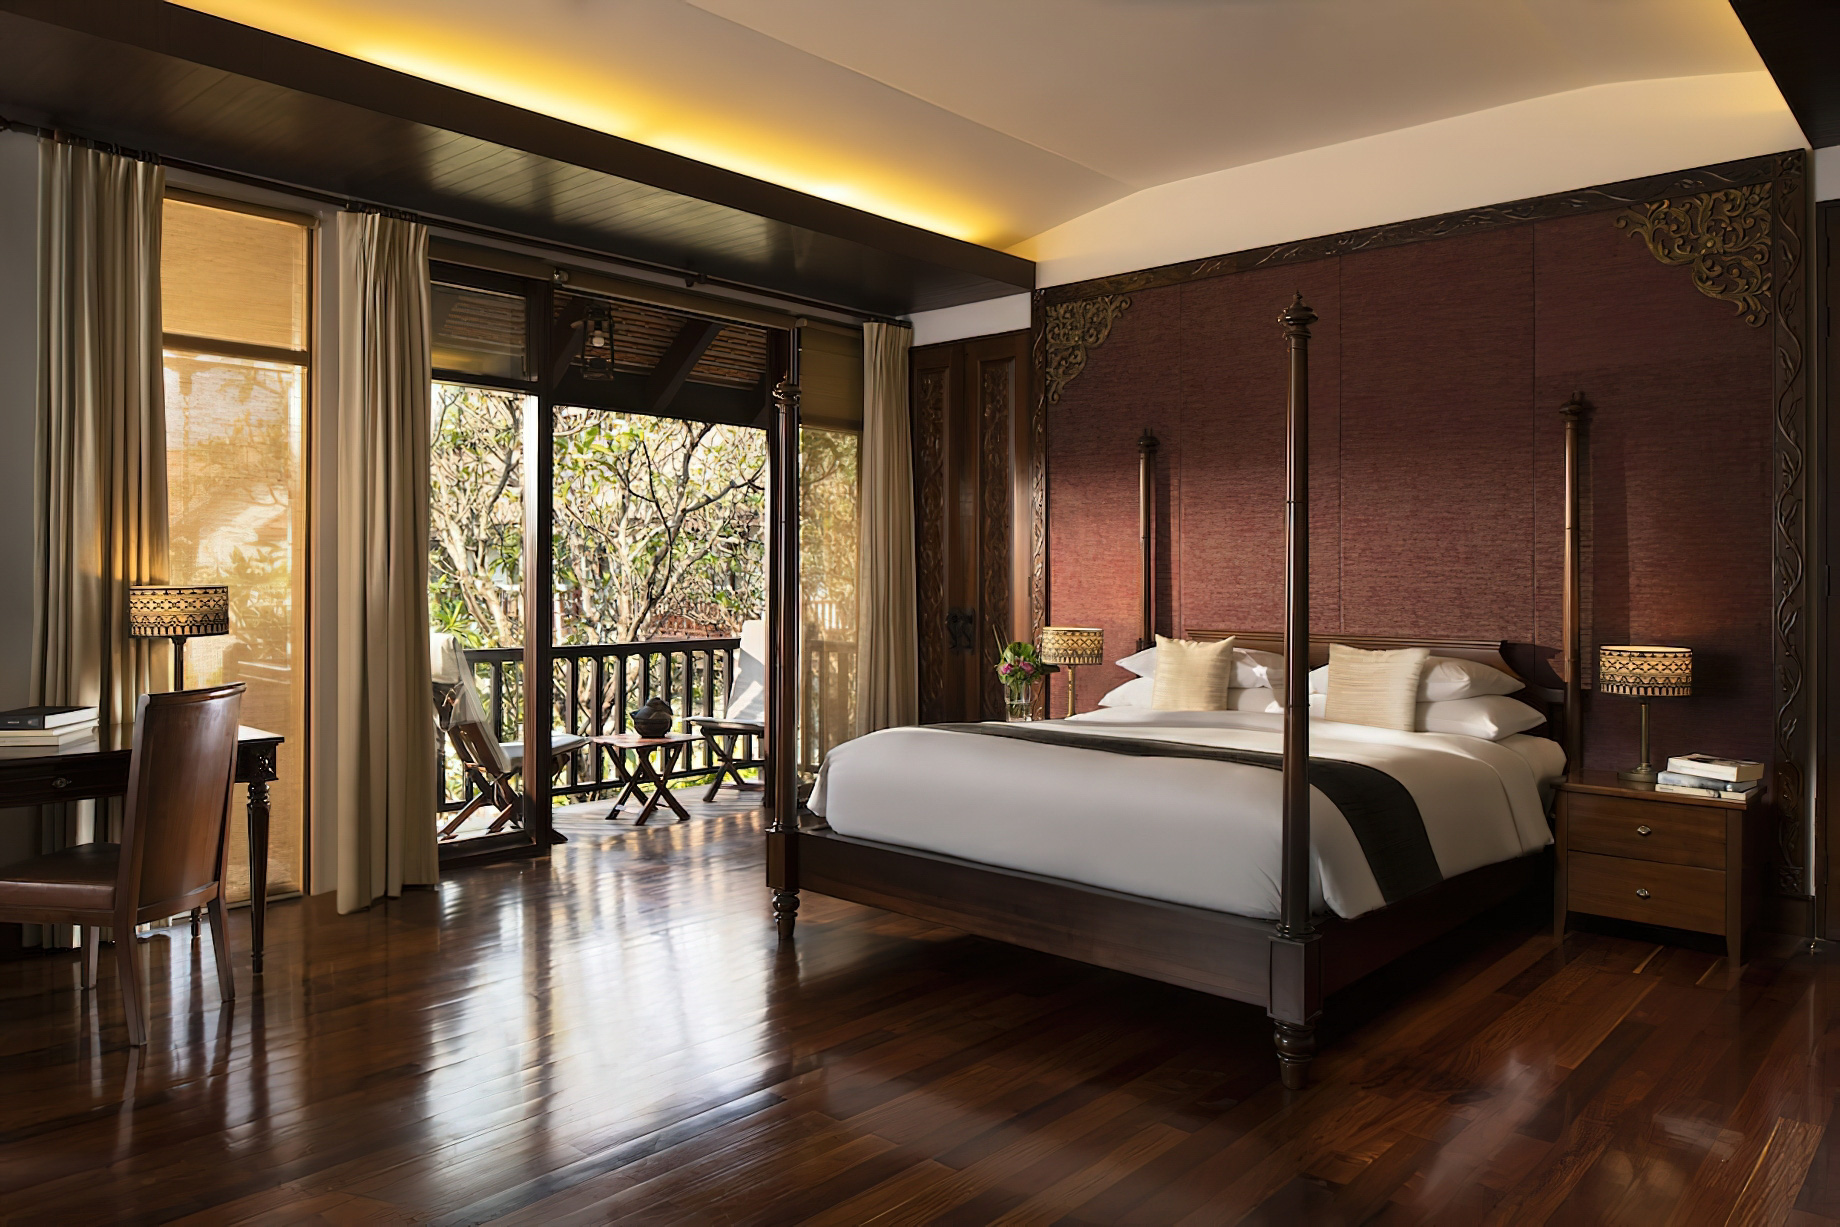 Anantara Angkor Resort - Siem Reap, Cambodia - Sothea Suite